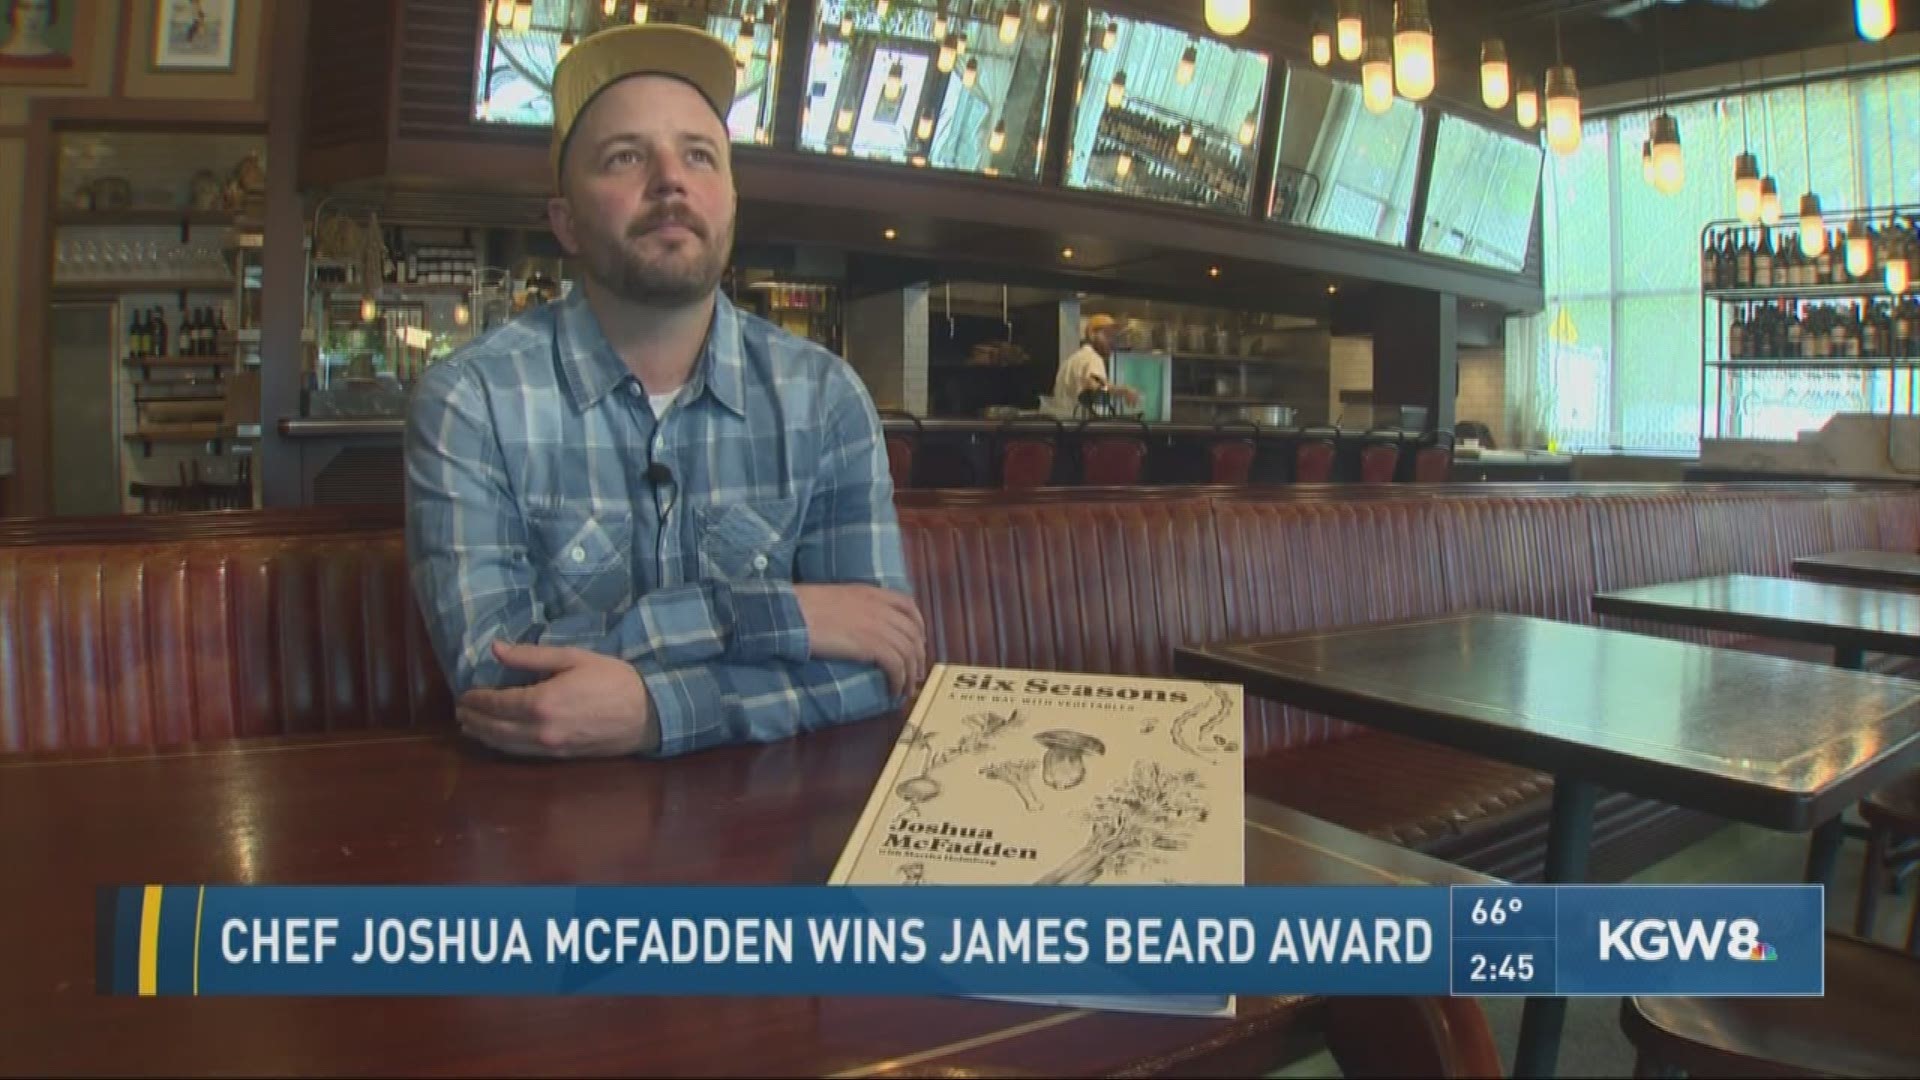 Chef Joshua McFadden wins James Beard Award